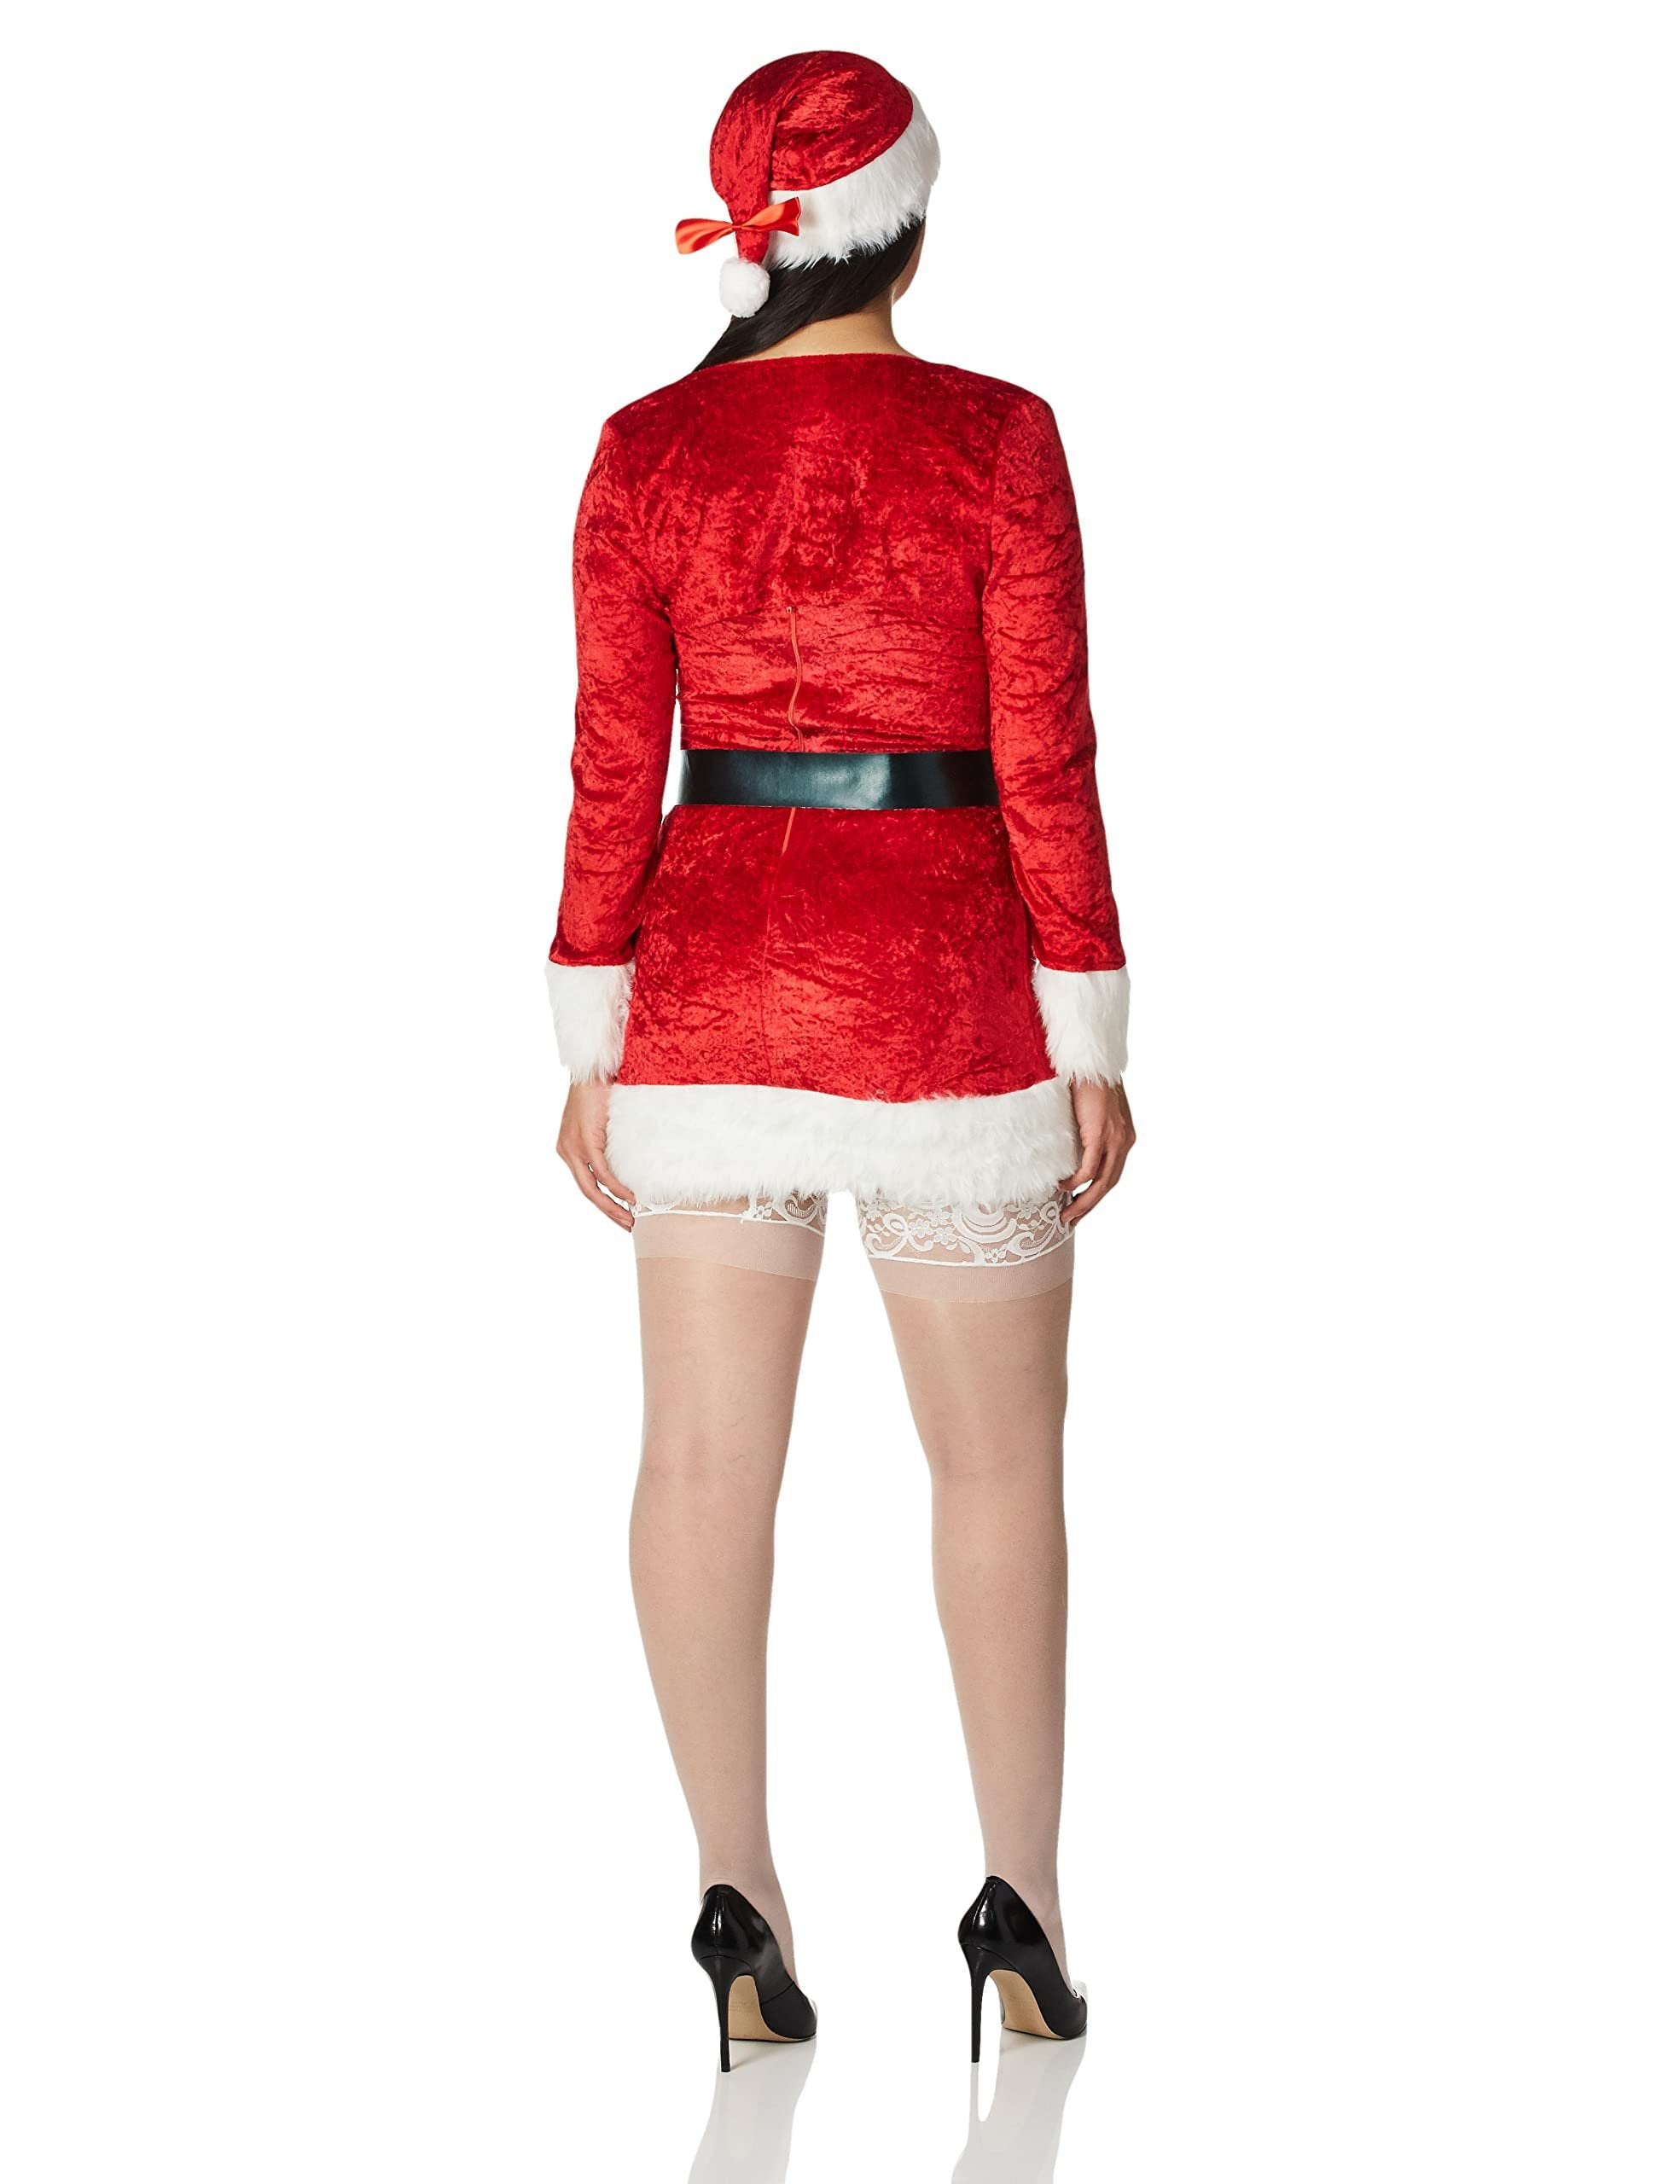 Dreamgirl Santa Baby Costume Red Medium Size Free Shipping & Returns!